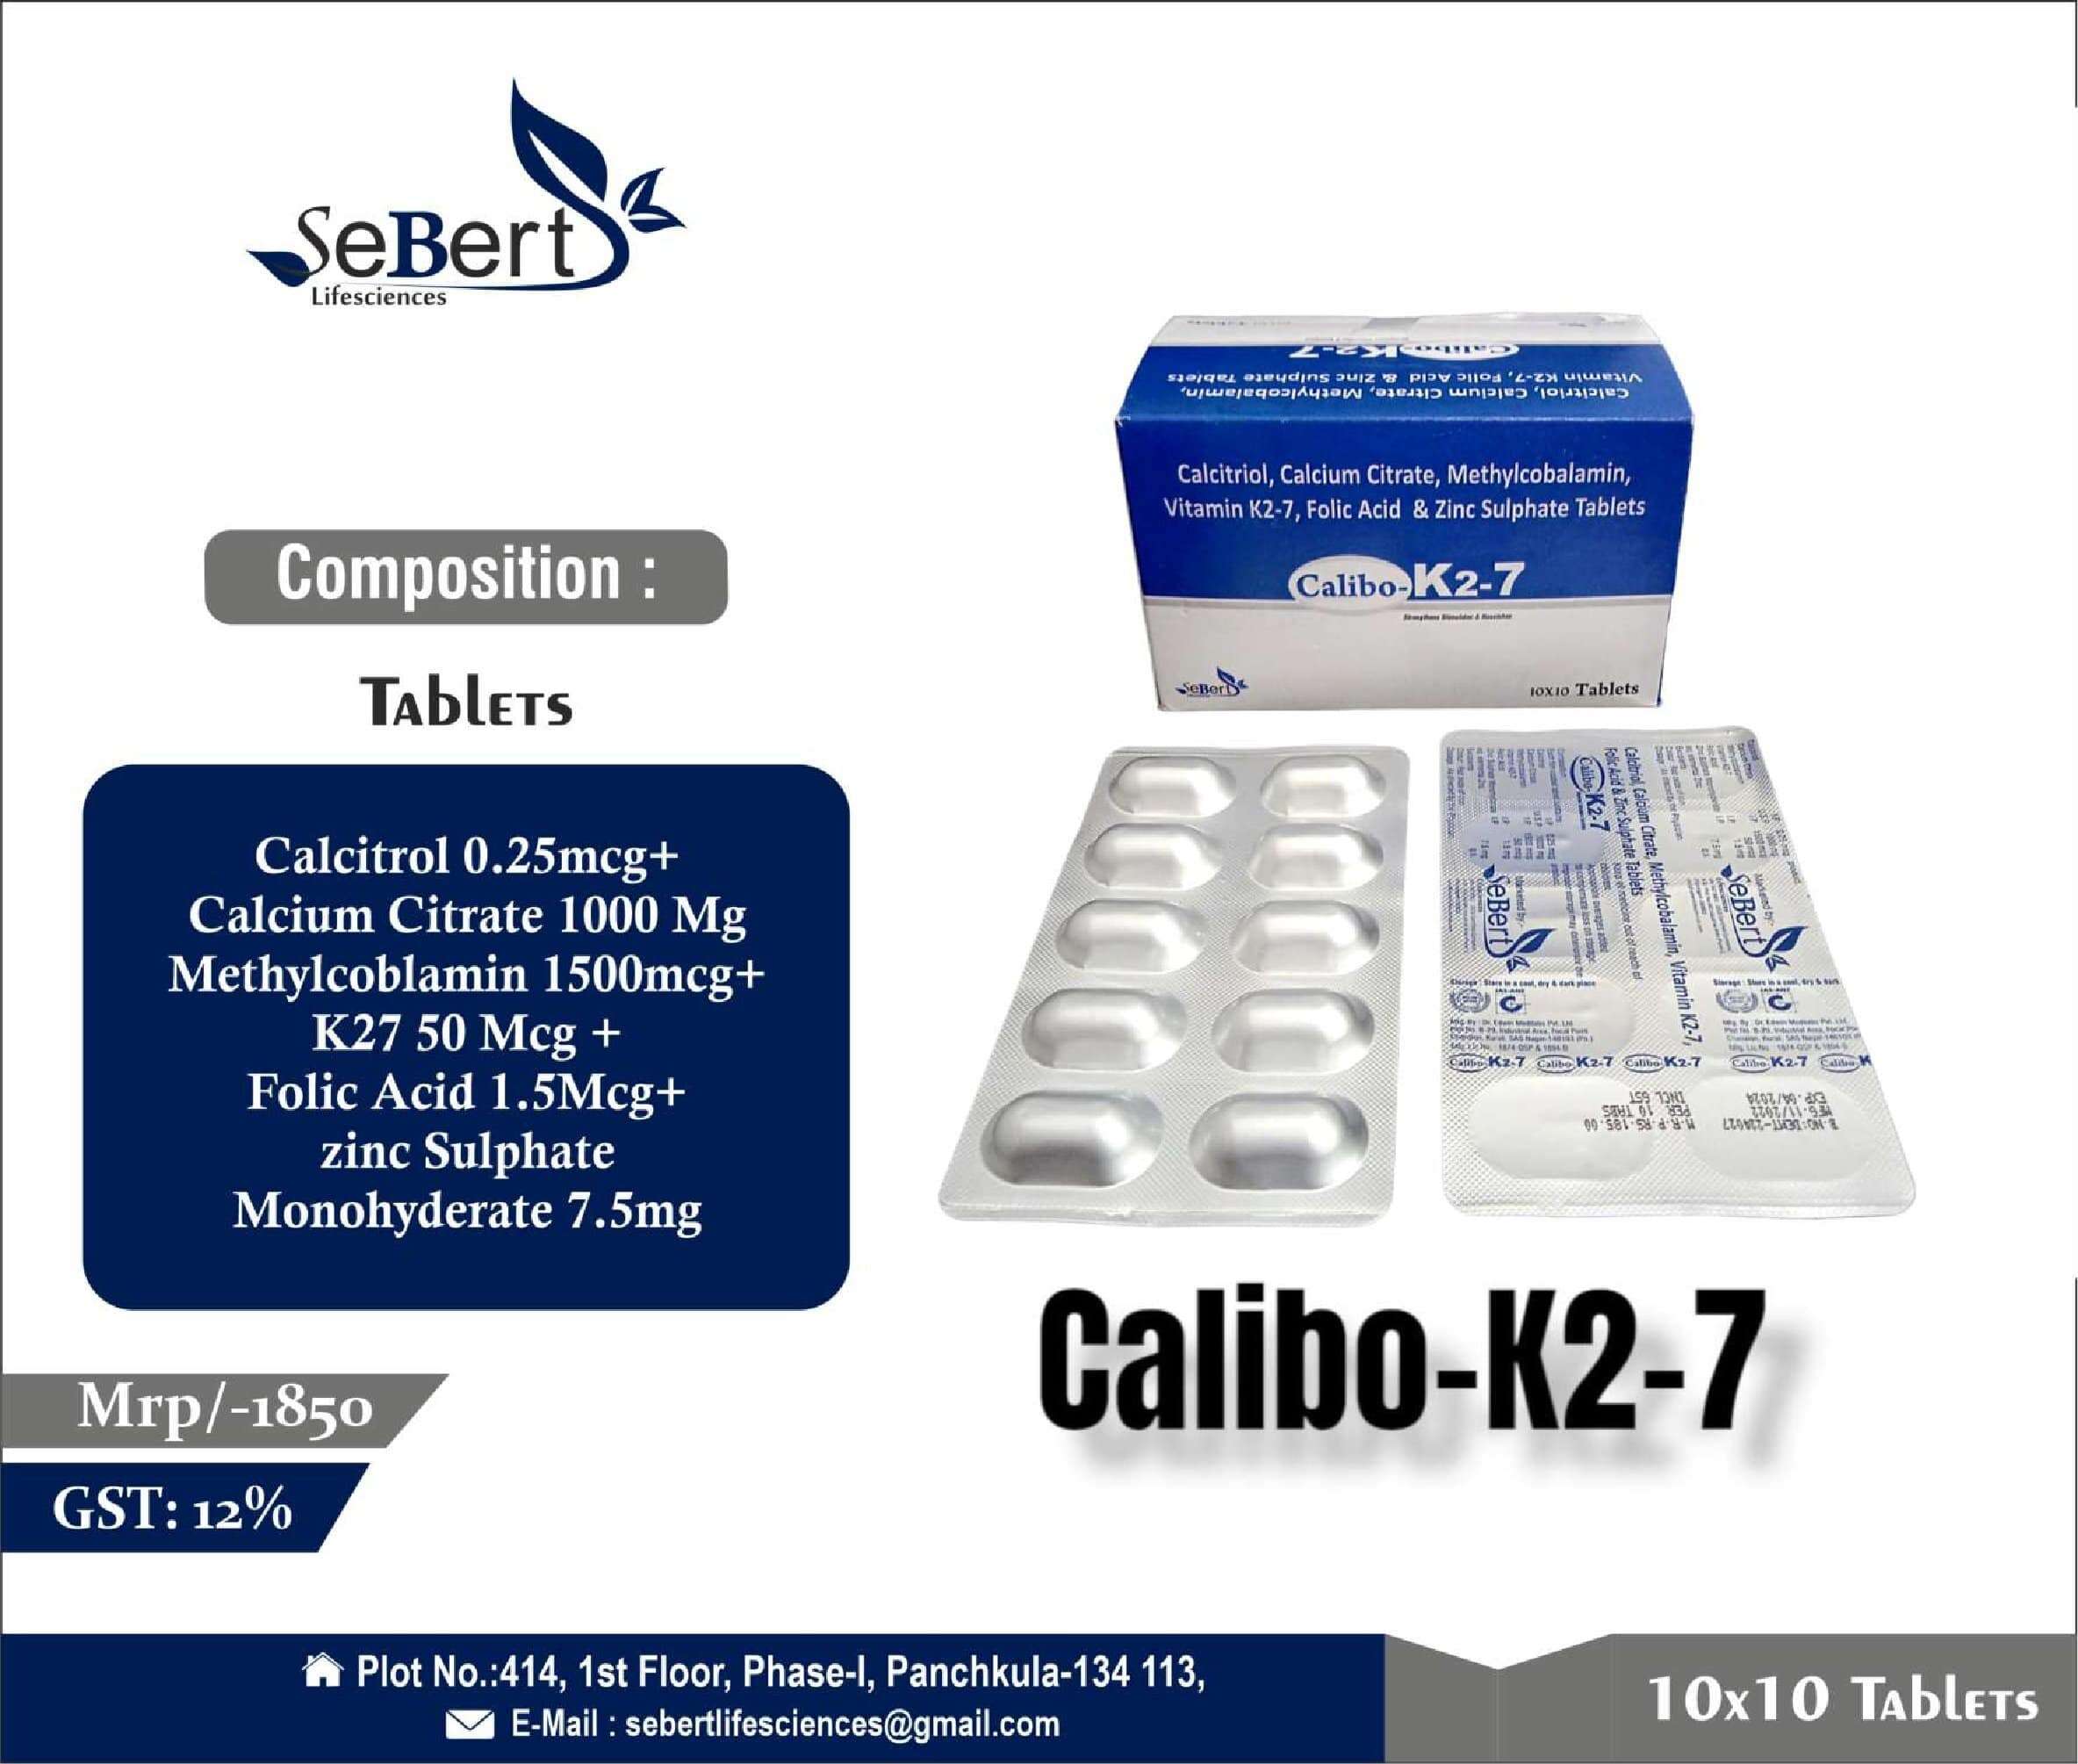 calcitrol 0.25mcg+ calcium citrate 1000 mg+ methylcoblamin 1500mcg+ k27 50 mcg + folic acid_x000d_
1.5 mcg+zinc sulphate monohyderate 7.5mg